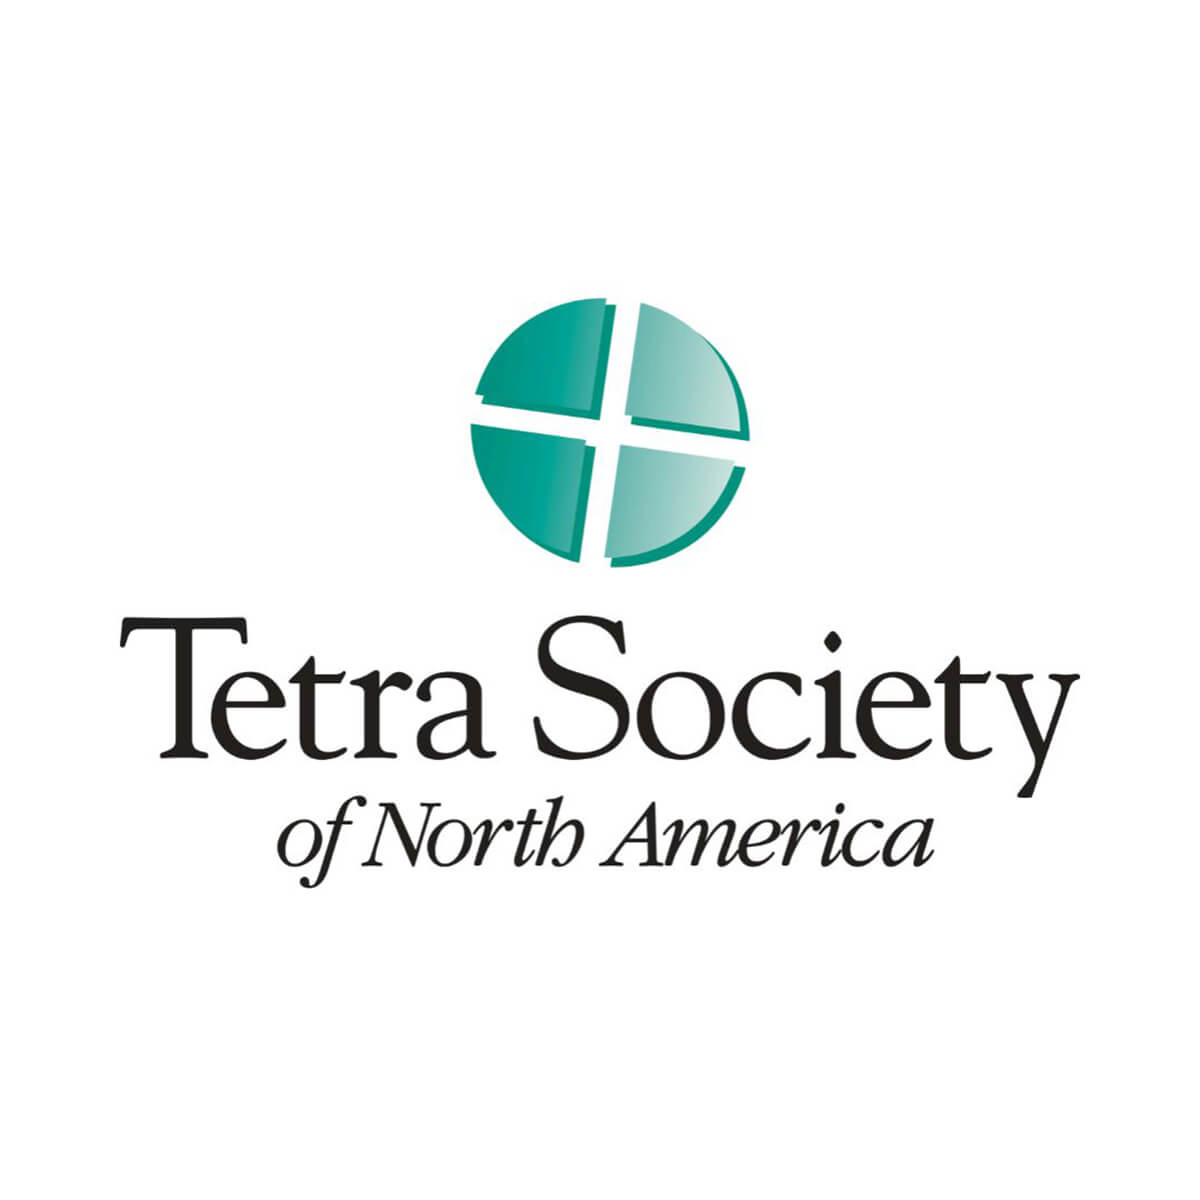 milenio stadium Tetra Society of North America logo